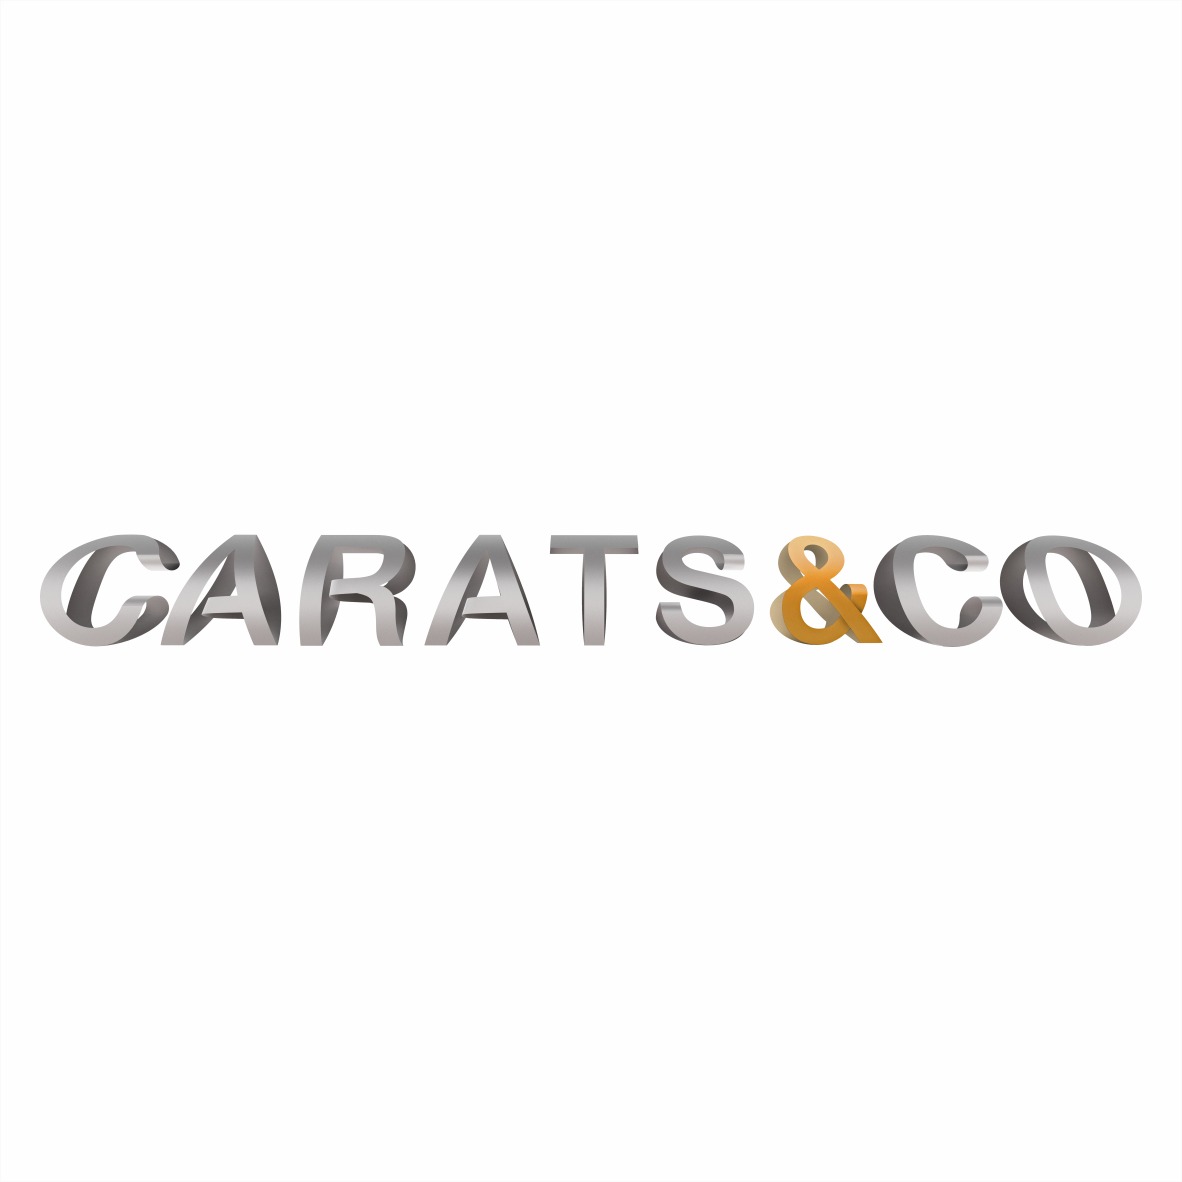 Carats&co Pte. Ltd. logo